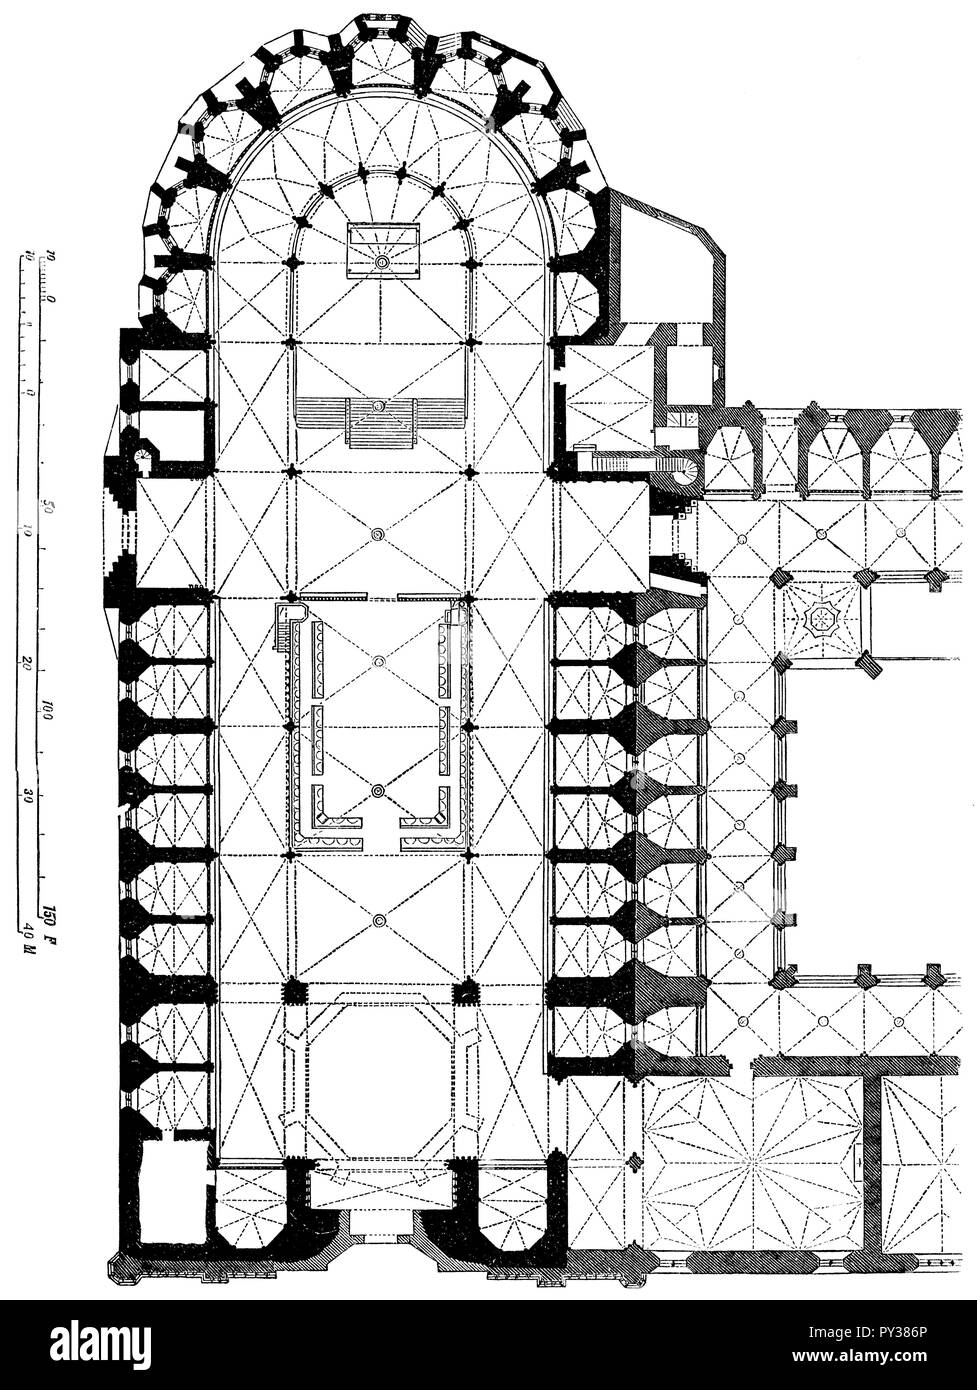 Barcelona Cathedral Floor Plan 1870 Stock Photo 223192446 Alamy